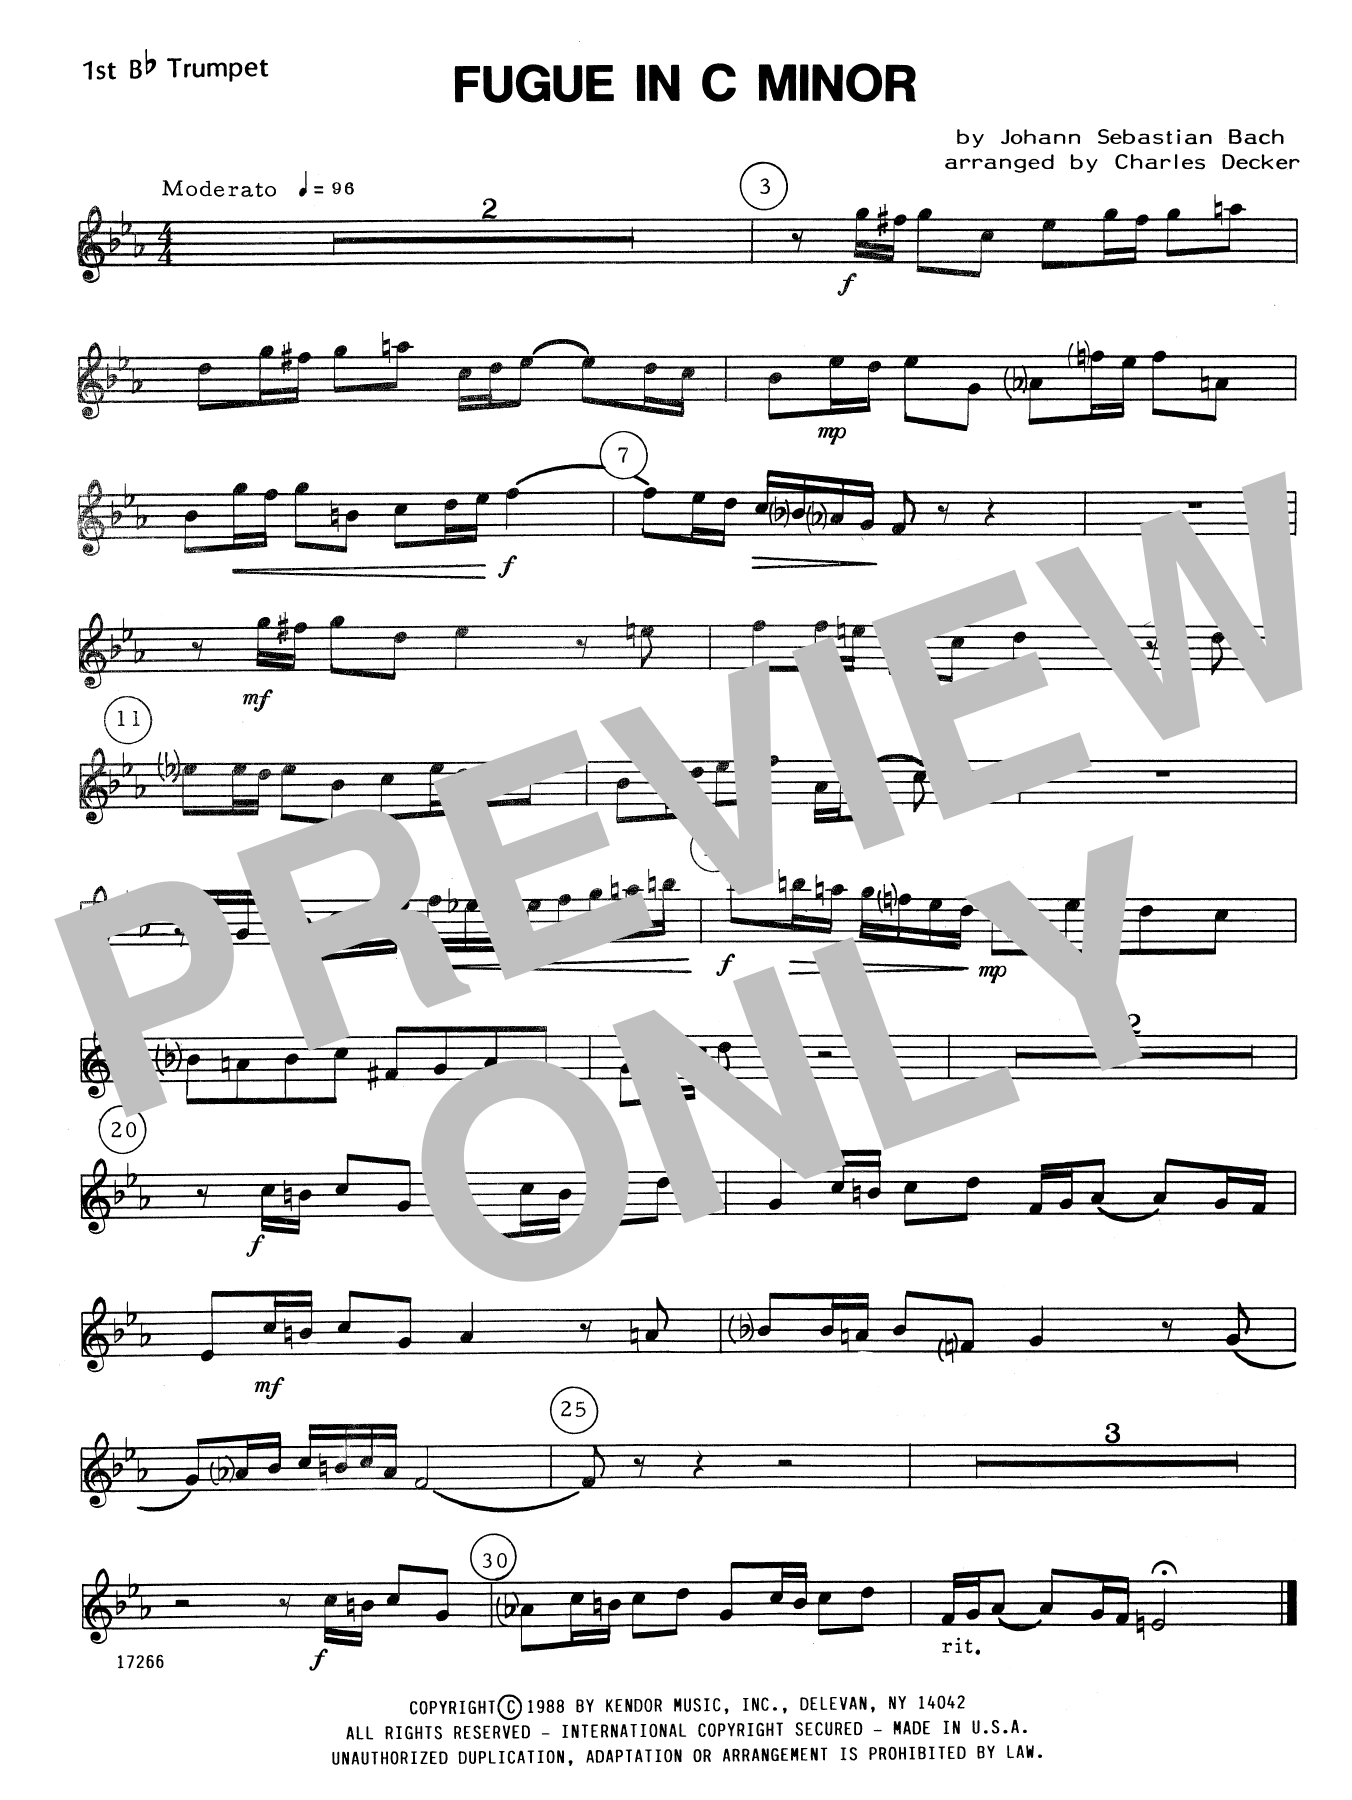 Download Charles Decker Fugue In C Minor - 1st Bb Trumpet Sheet Music